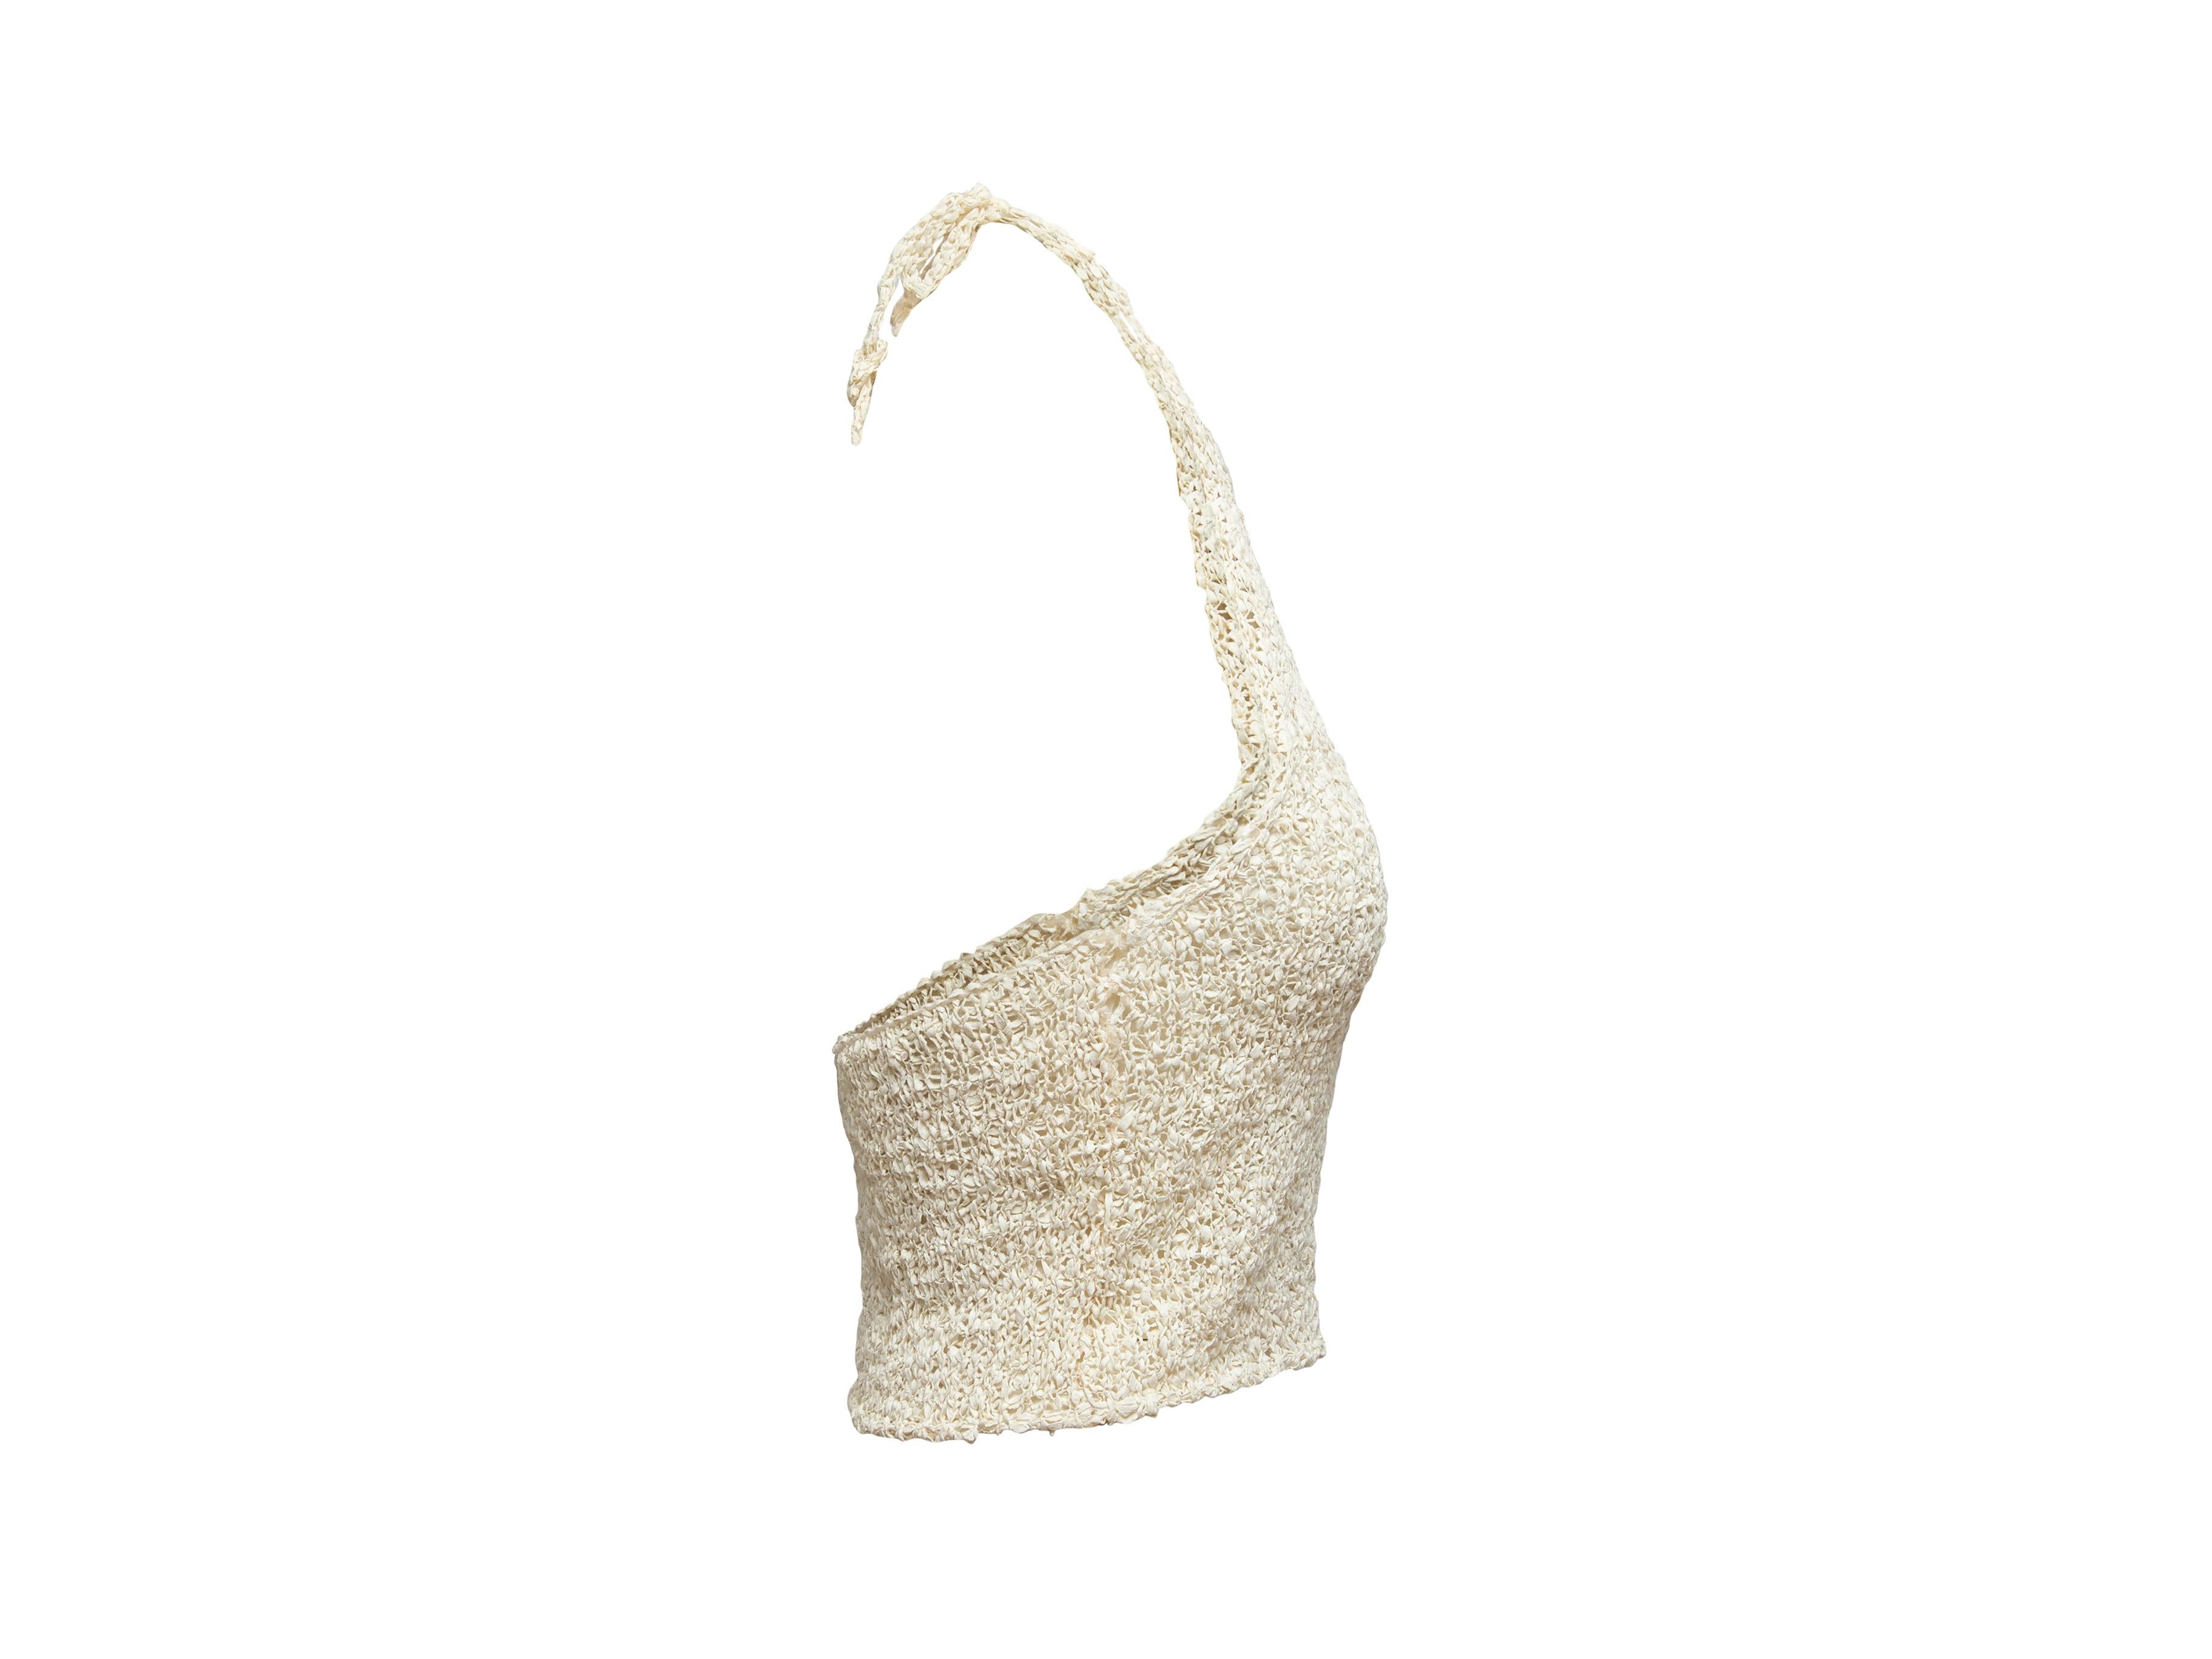 Product details: White crochet halter top by Ralph Lauren Collection. Tie closure at nape. 28